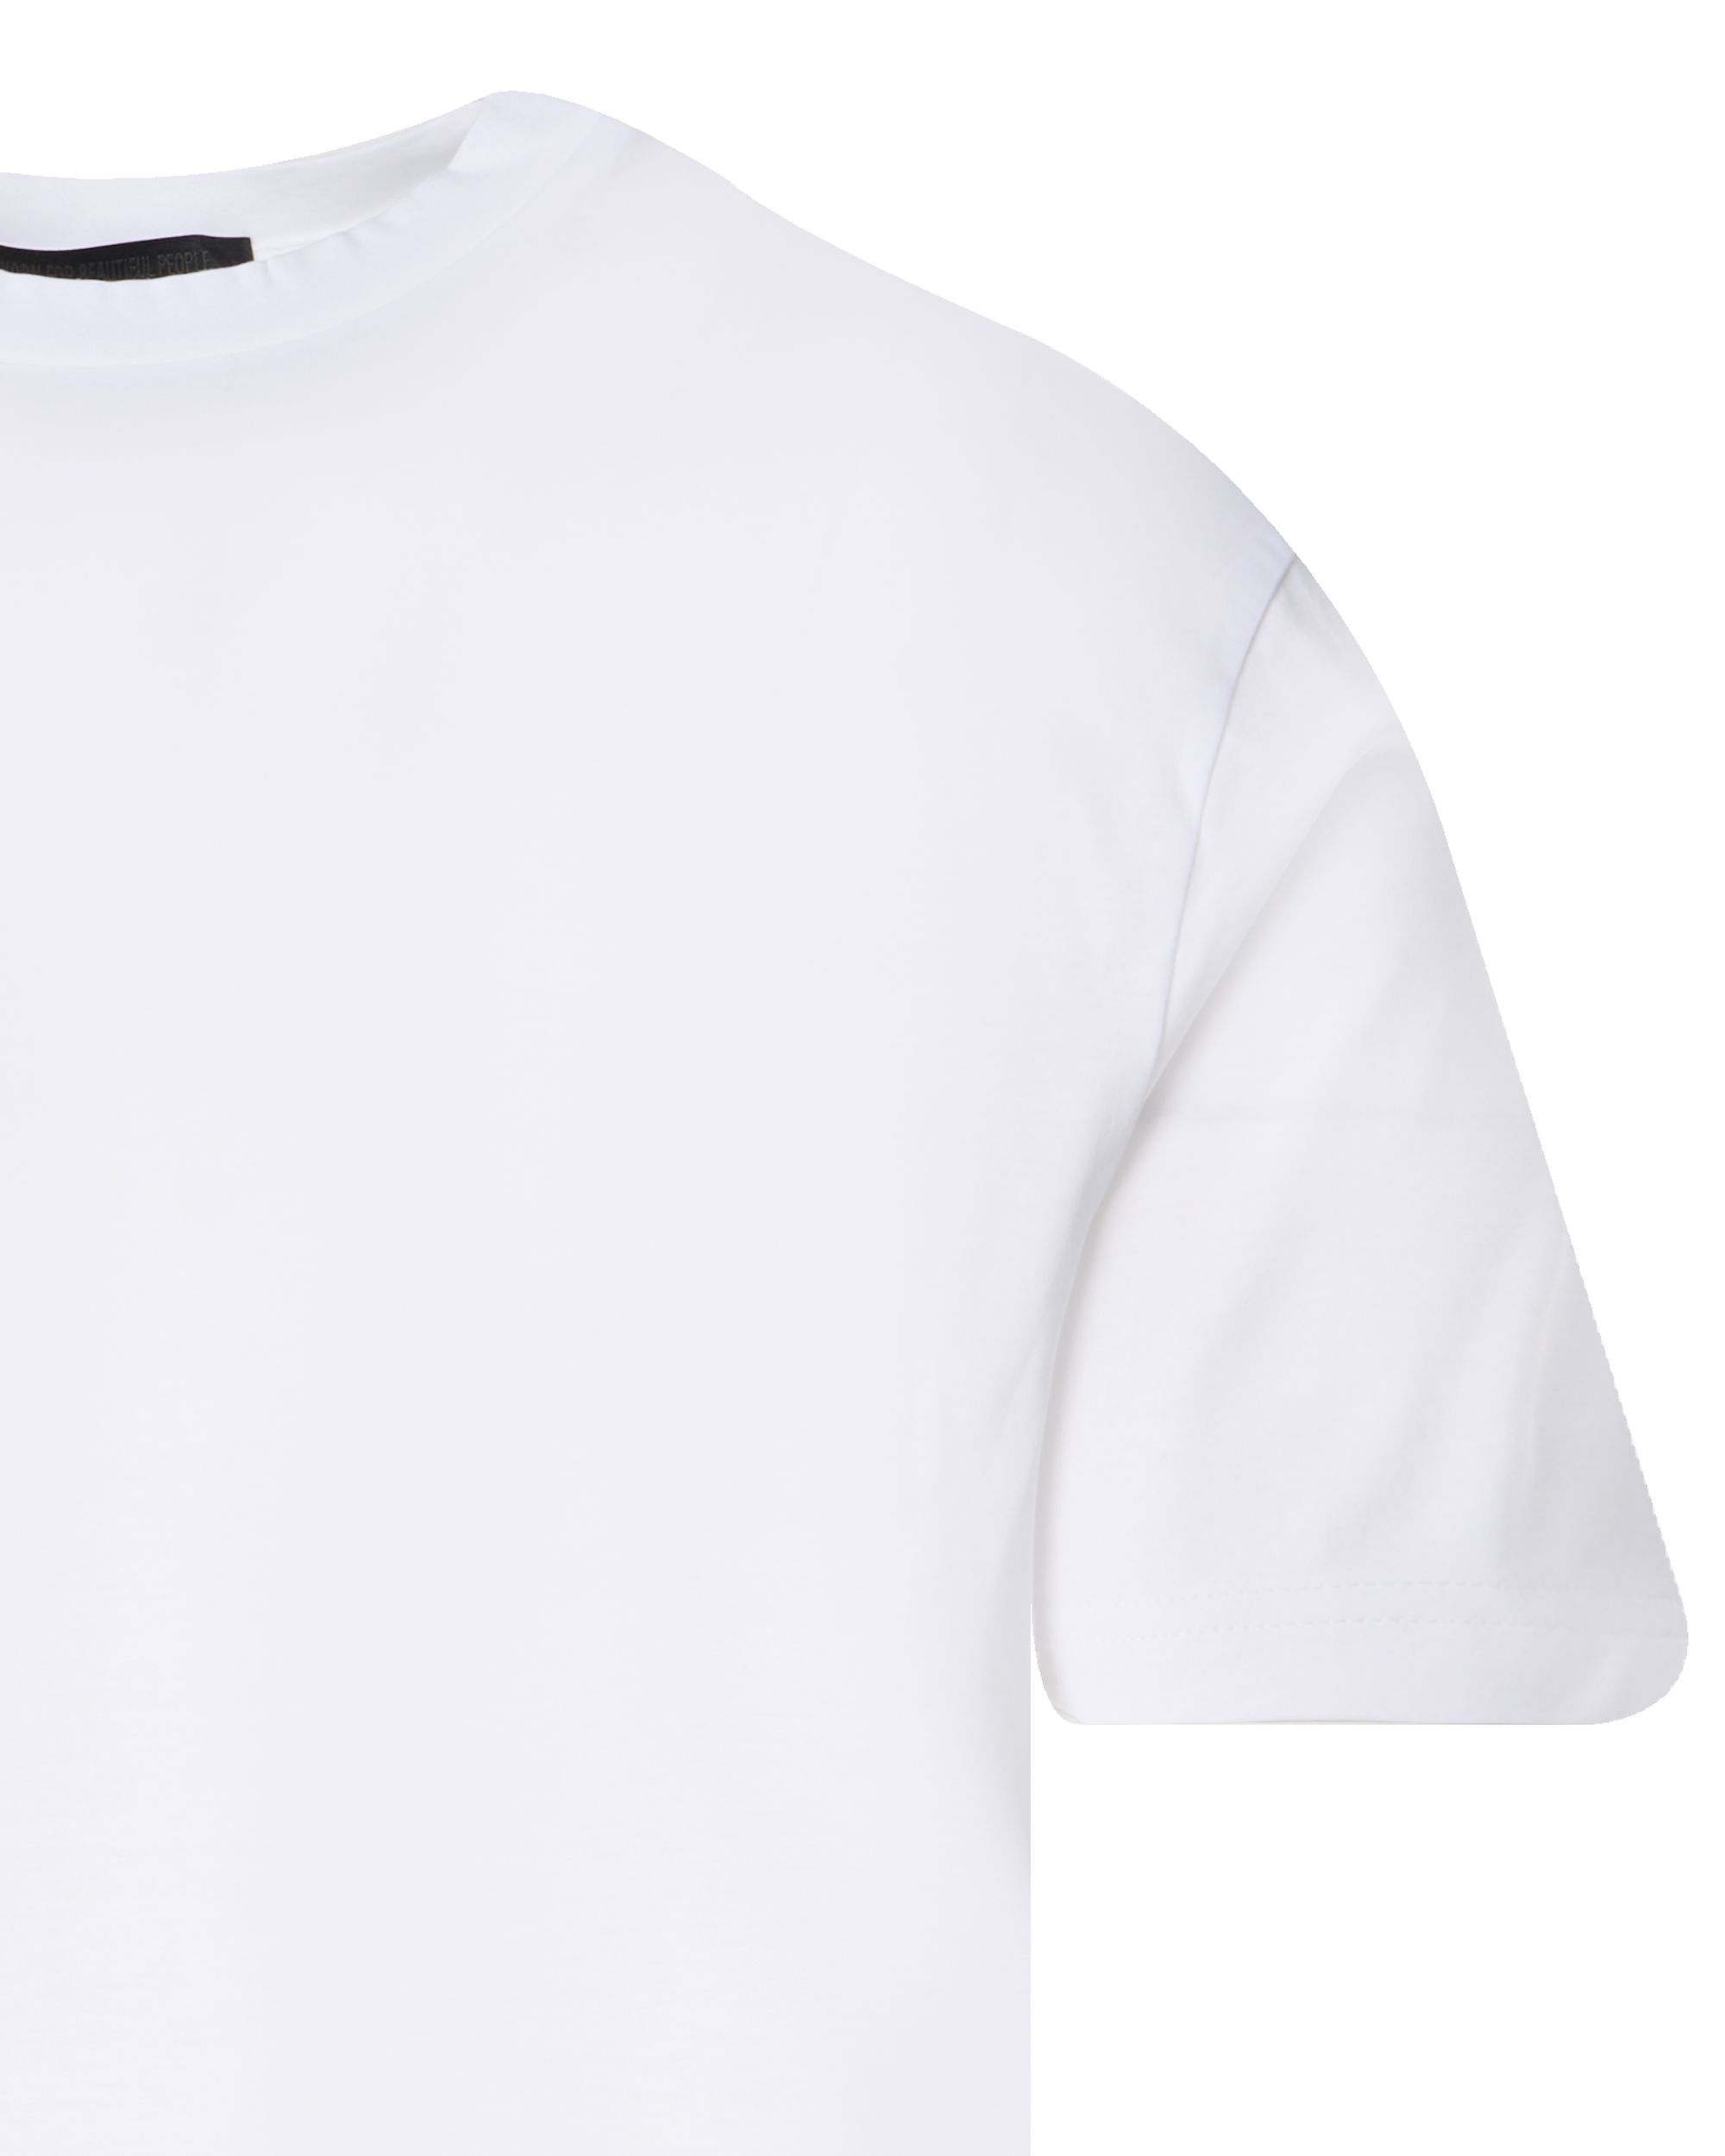 Drykorn Gilberd T-shirt KM Wit 093318-001-L